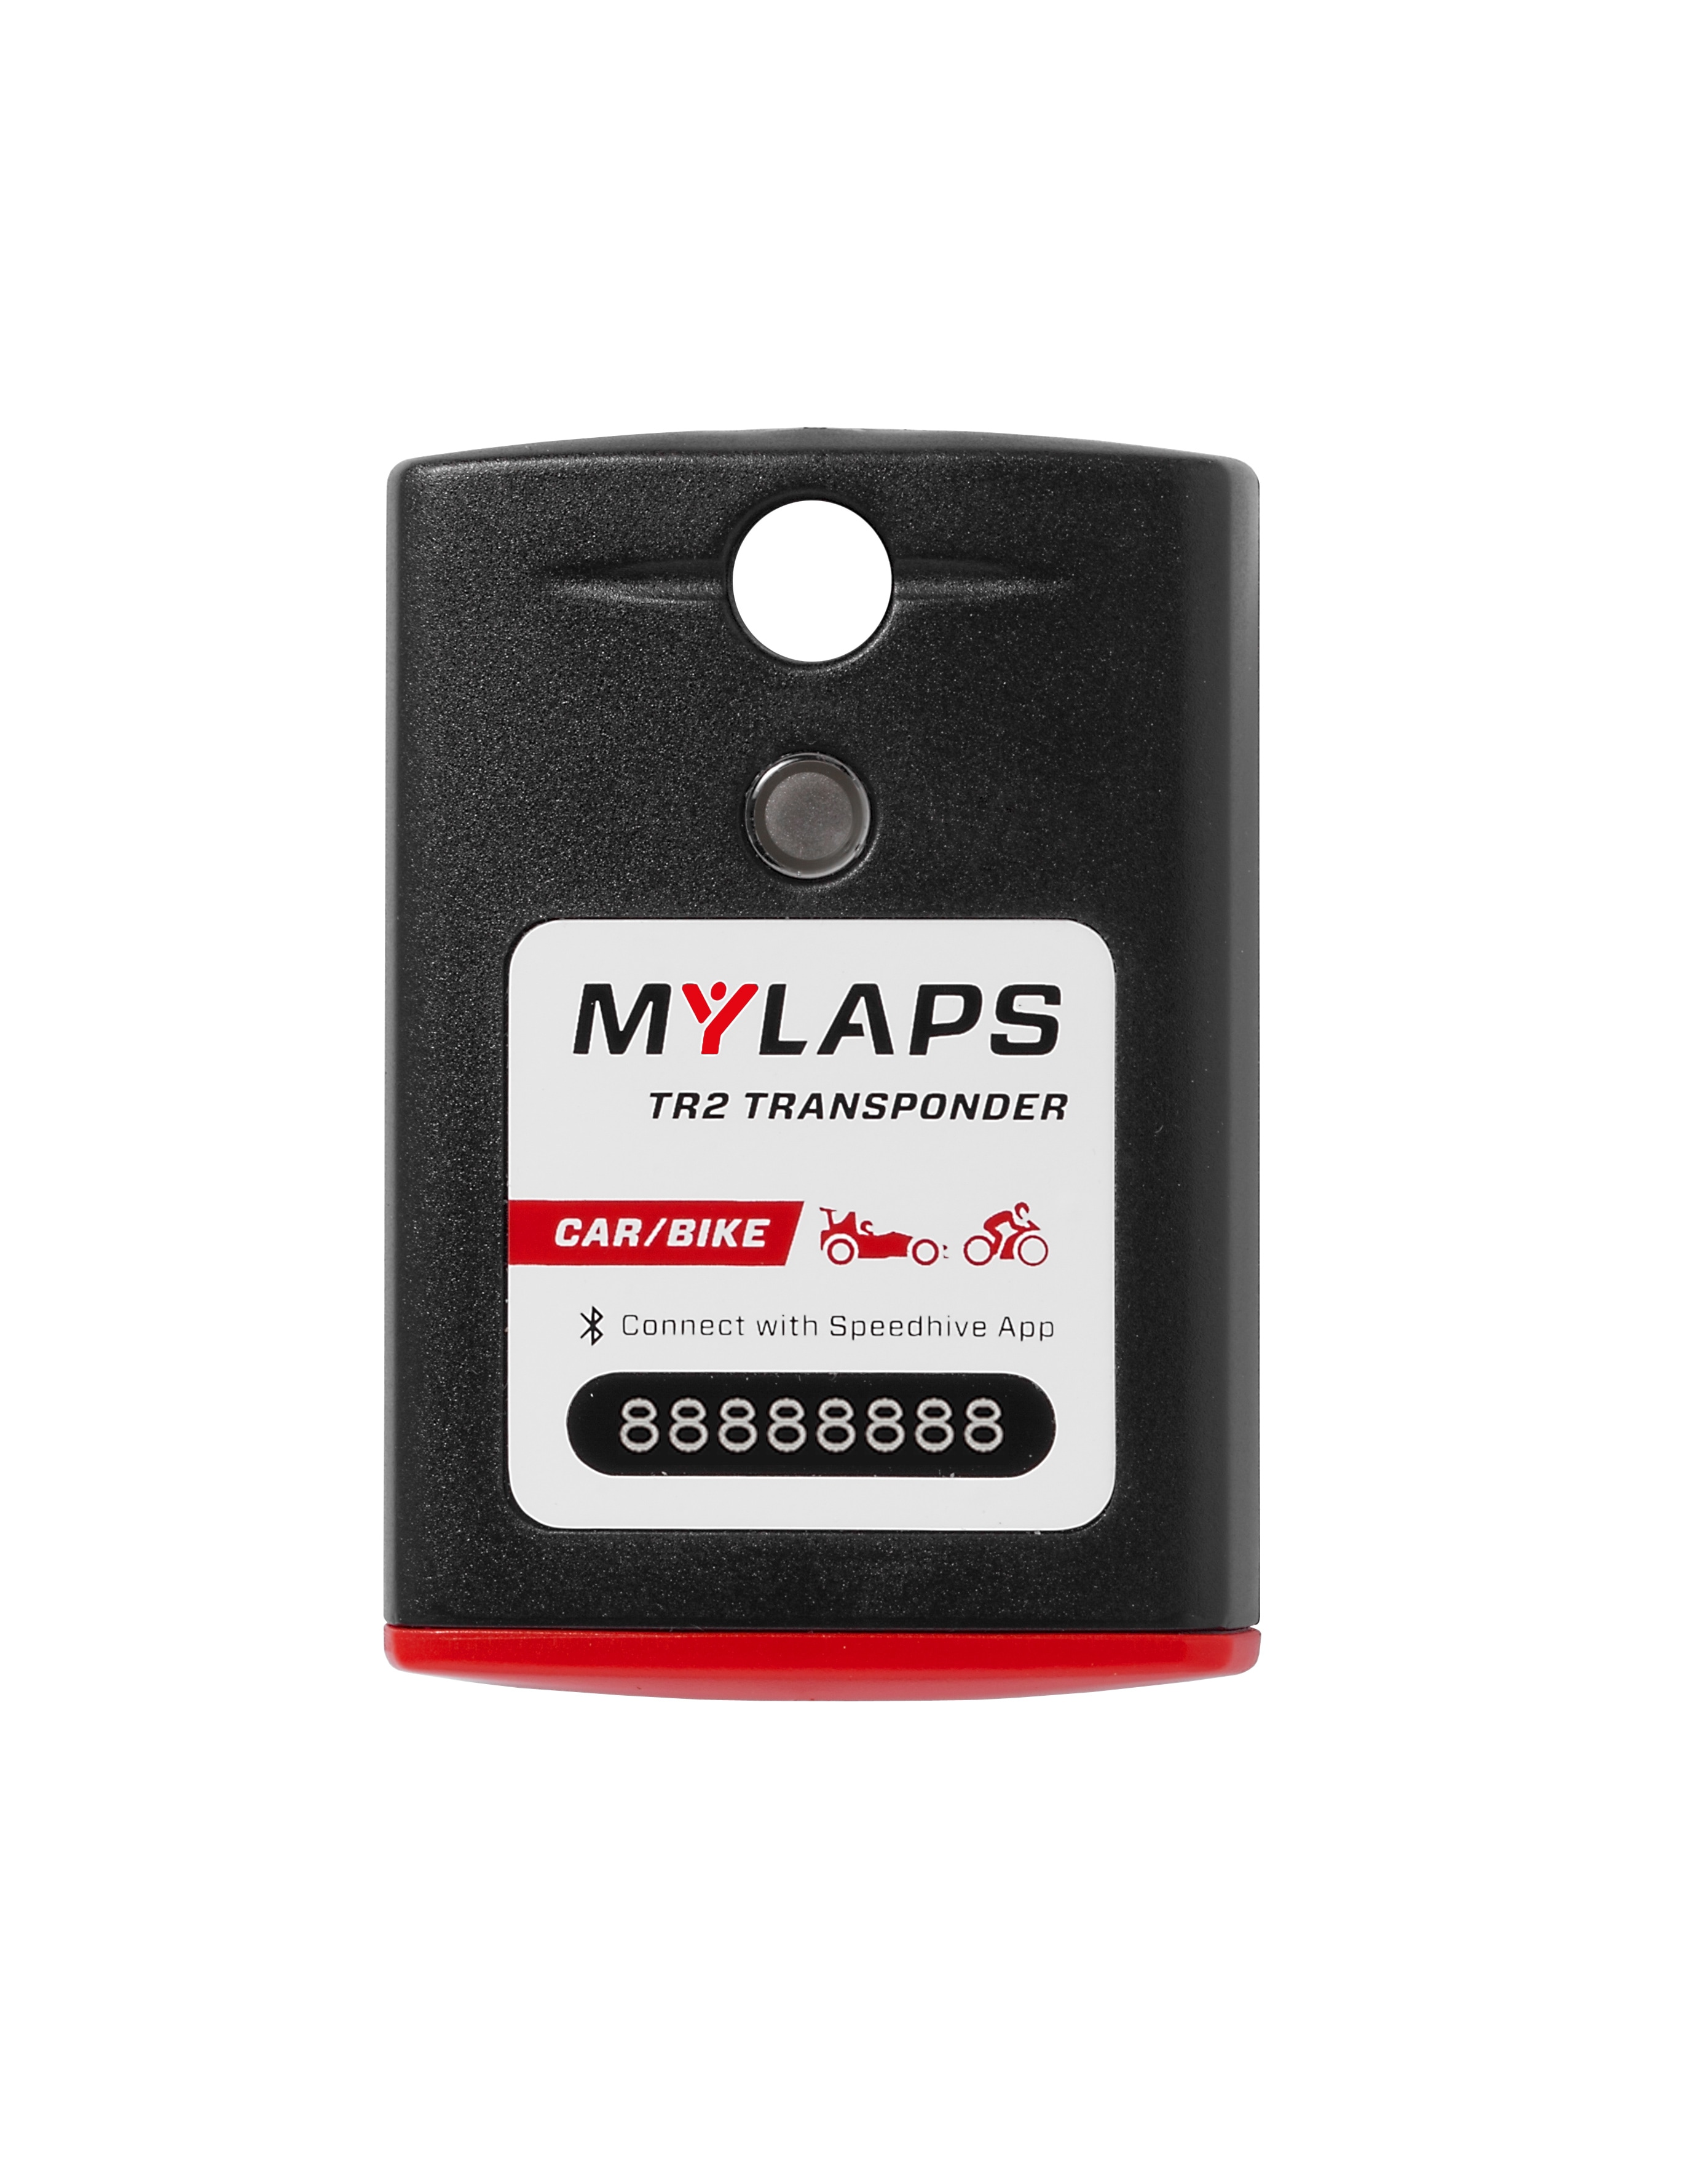 Transponder MyLaps TR2 Car/Bike 2 year(Not MX)